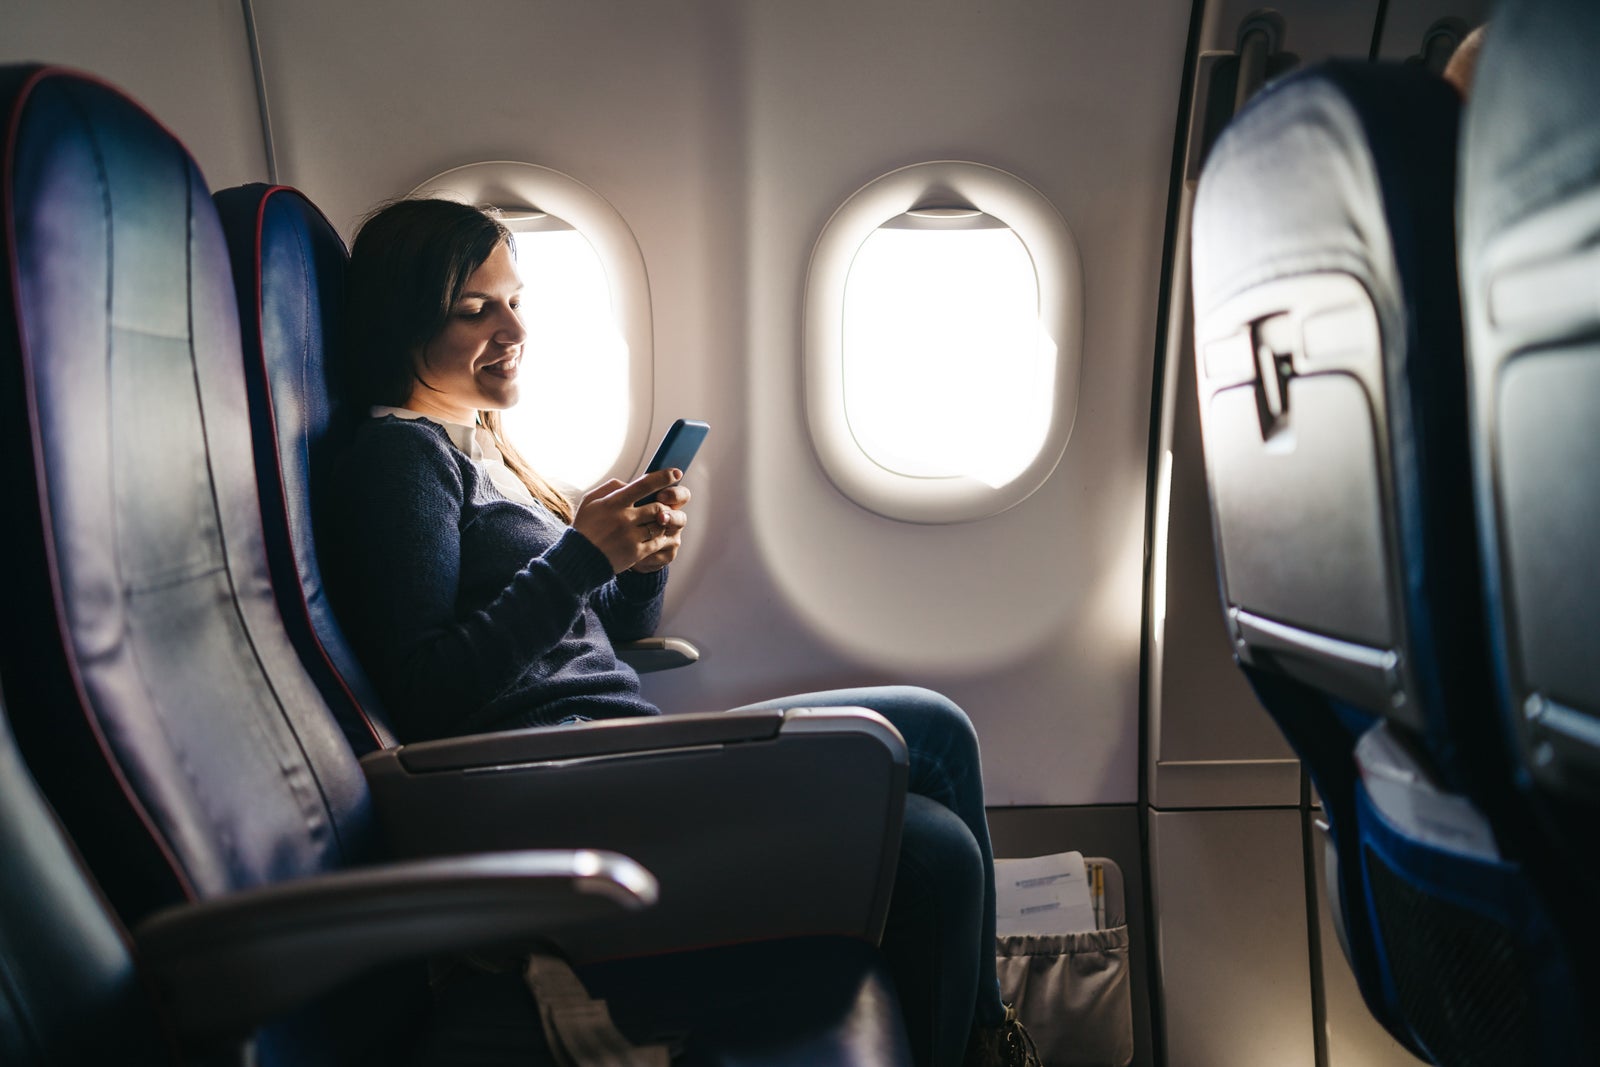 woman using phone on plane